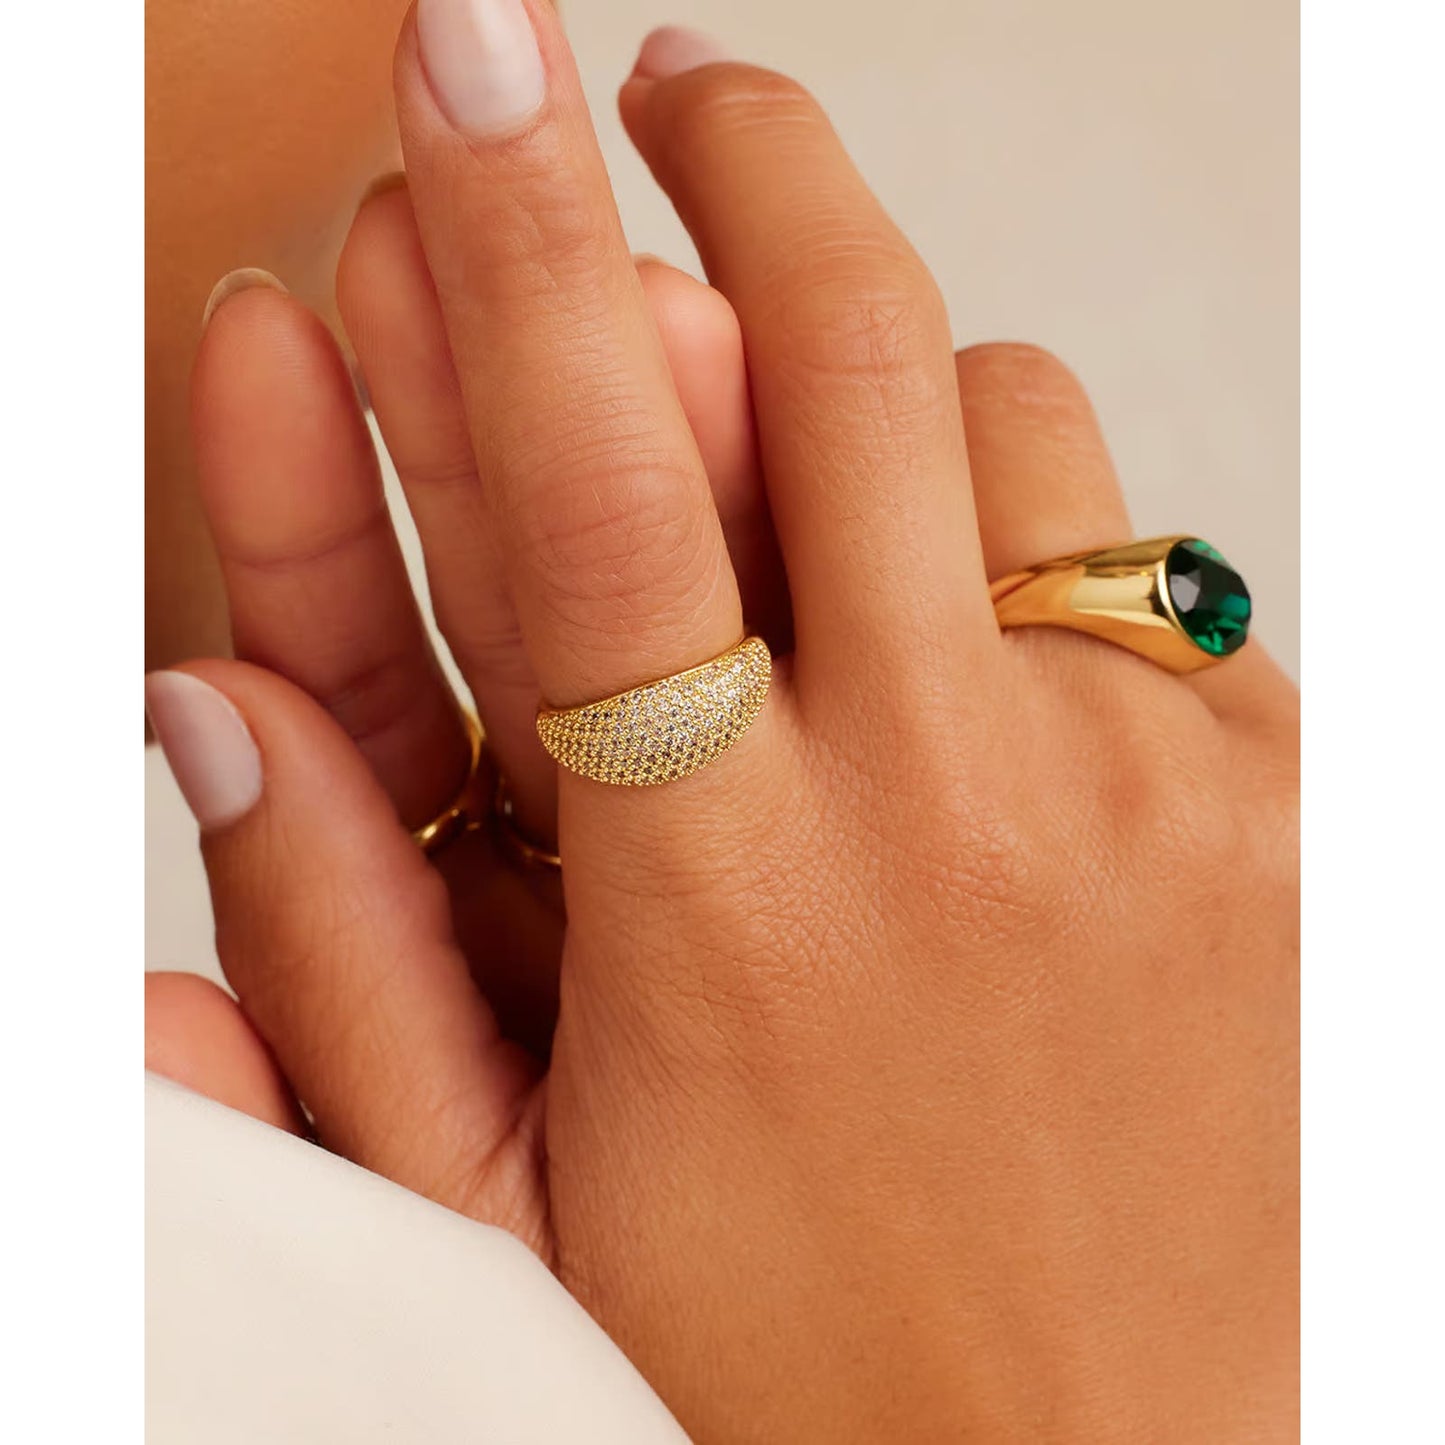 Gorjana Nova Shimmer Ring 18k Gold Plated Cubic Zirconia Party Jewelry Size 6